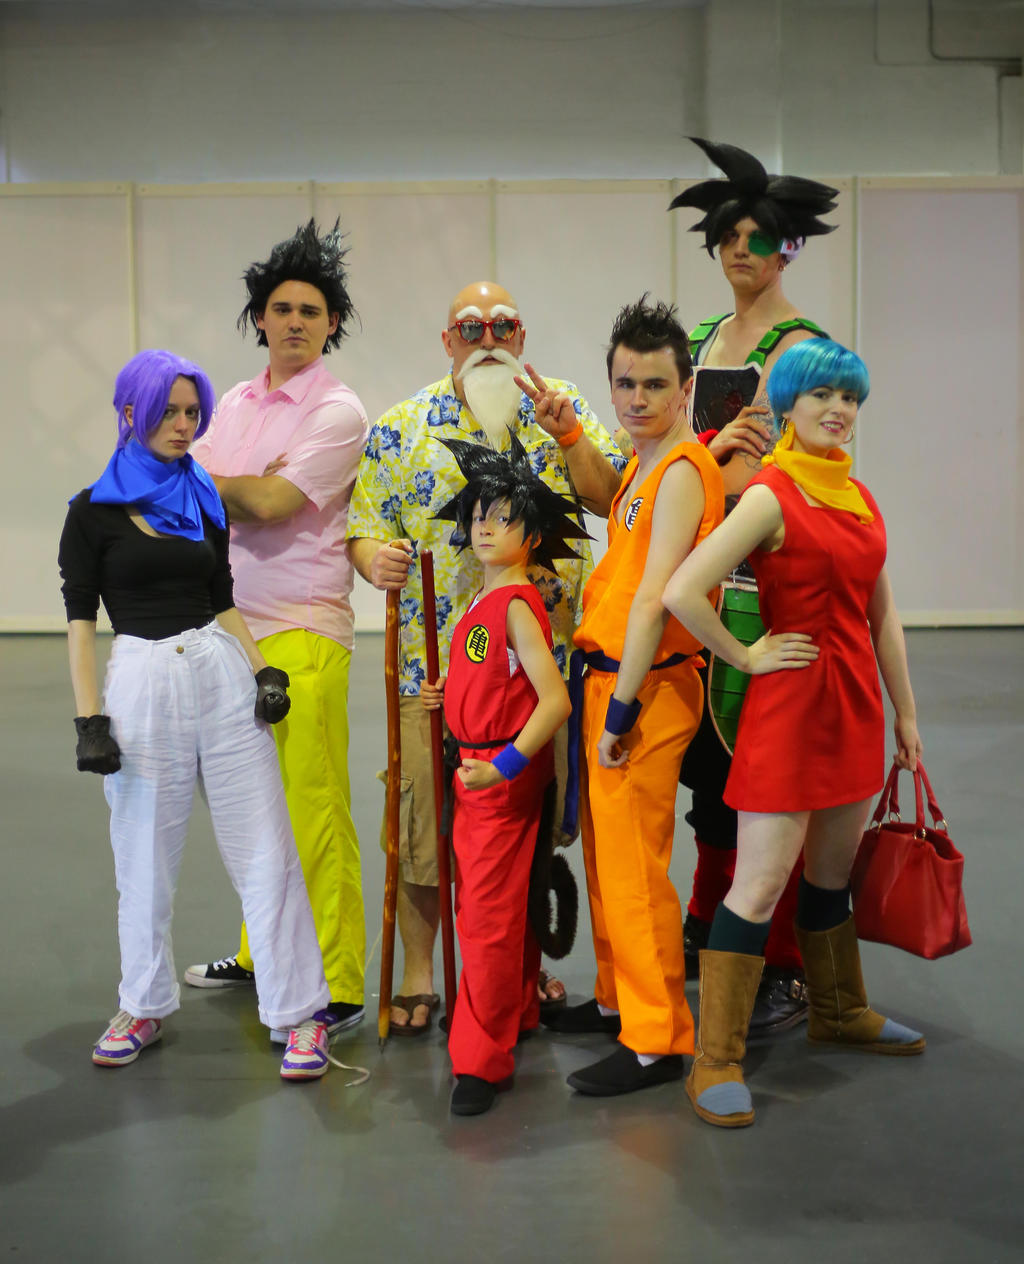 Dragonball Cosplay group UK - Hyper Japan by KatMaz on DeviantArt